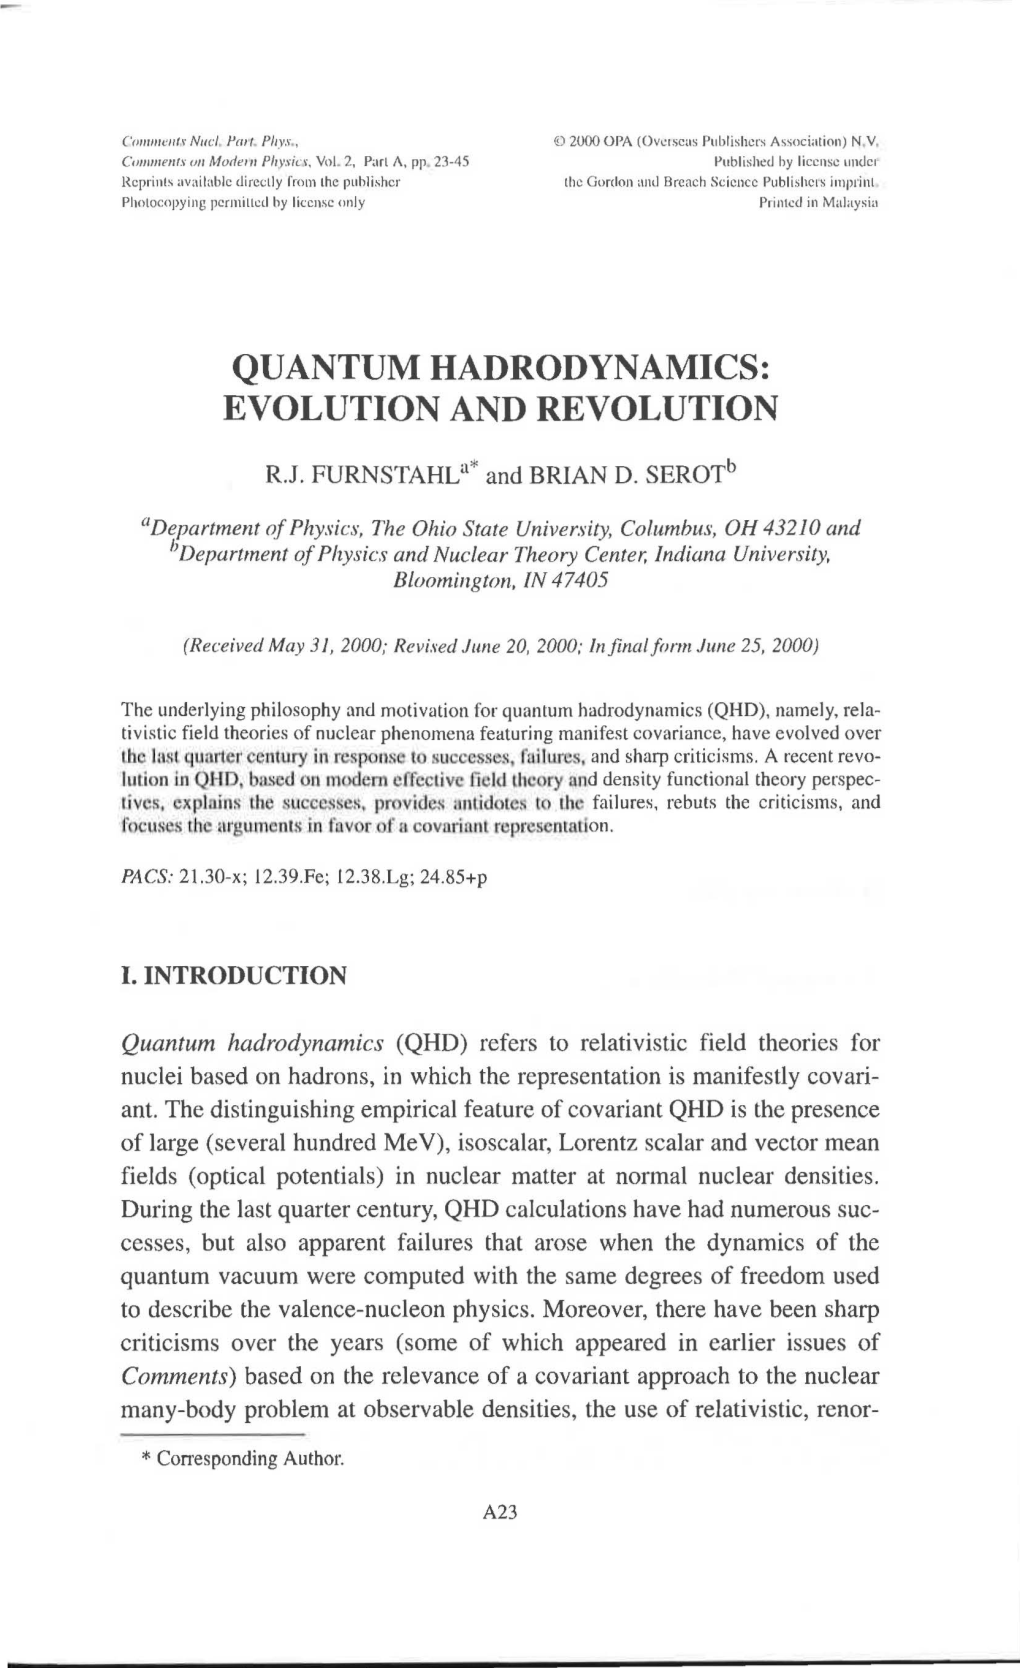 Quantum Hadrodynamics: Evolution and Revolution